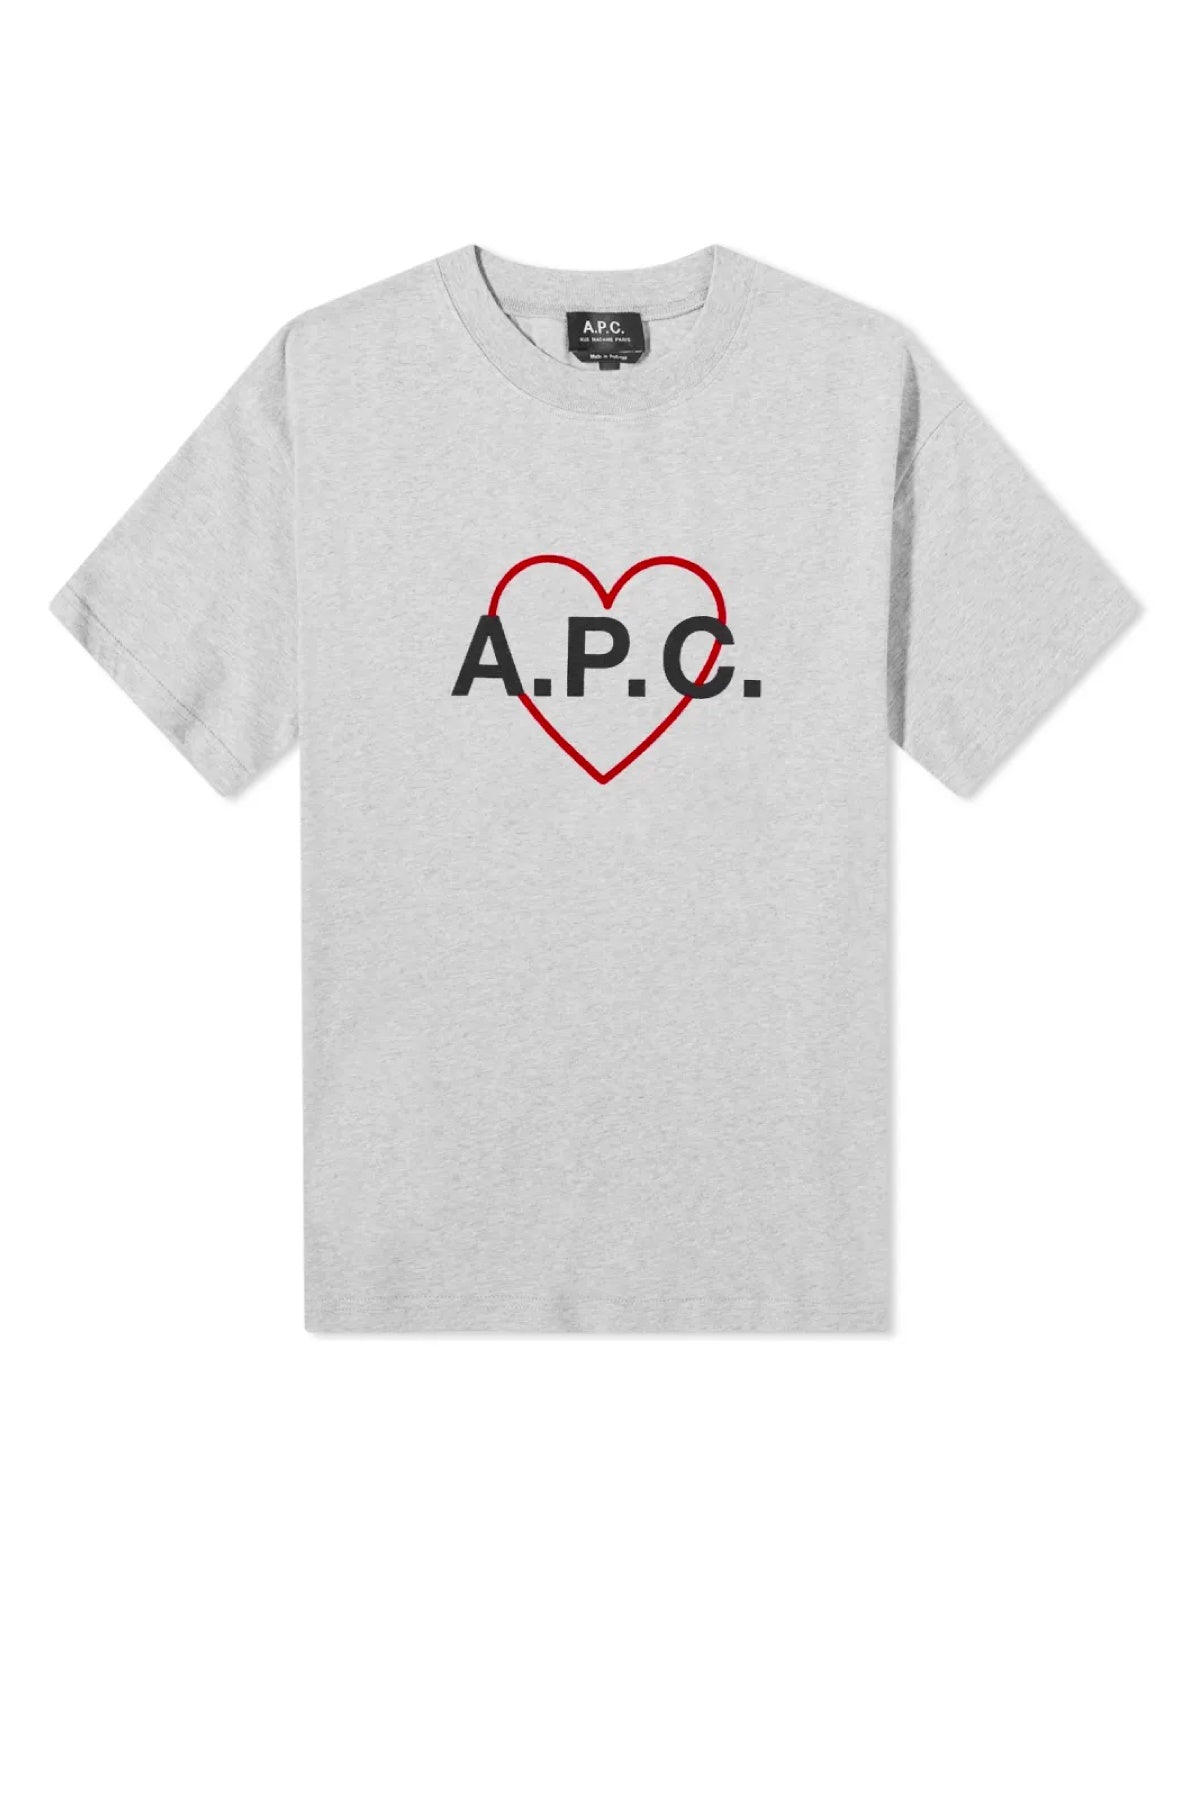 A.P.C Billy T-Shirt - Heather Grey